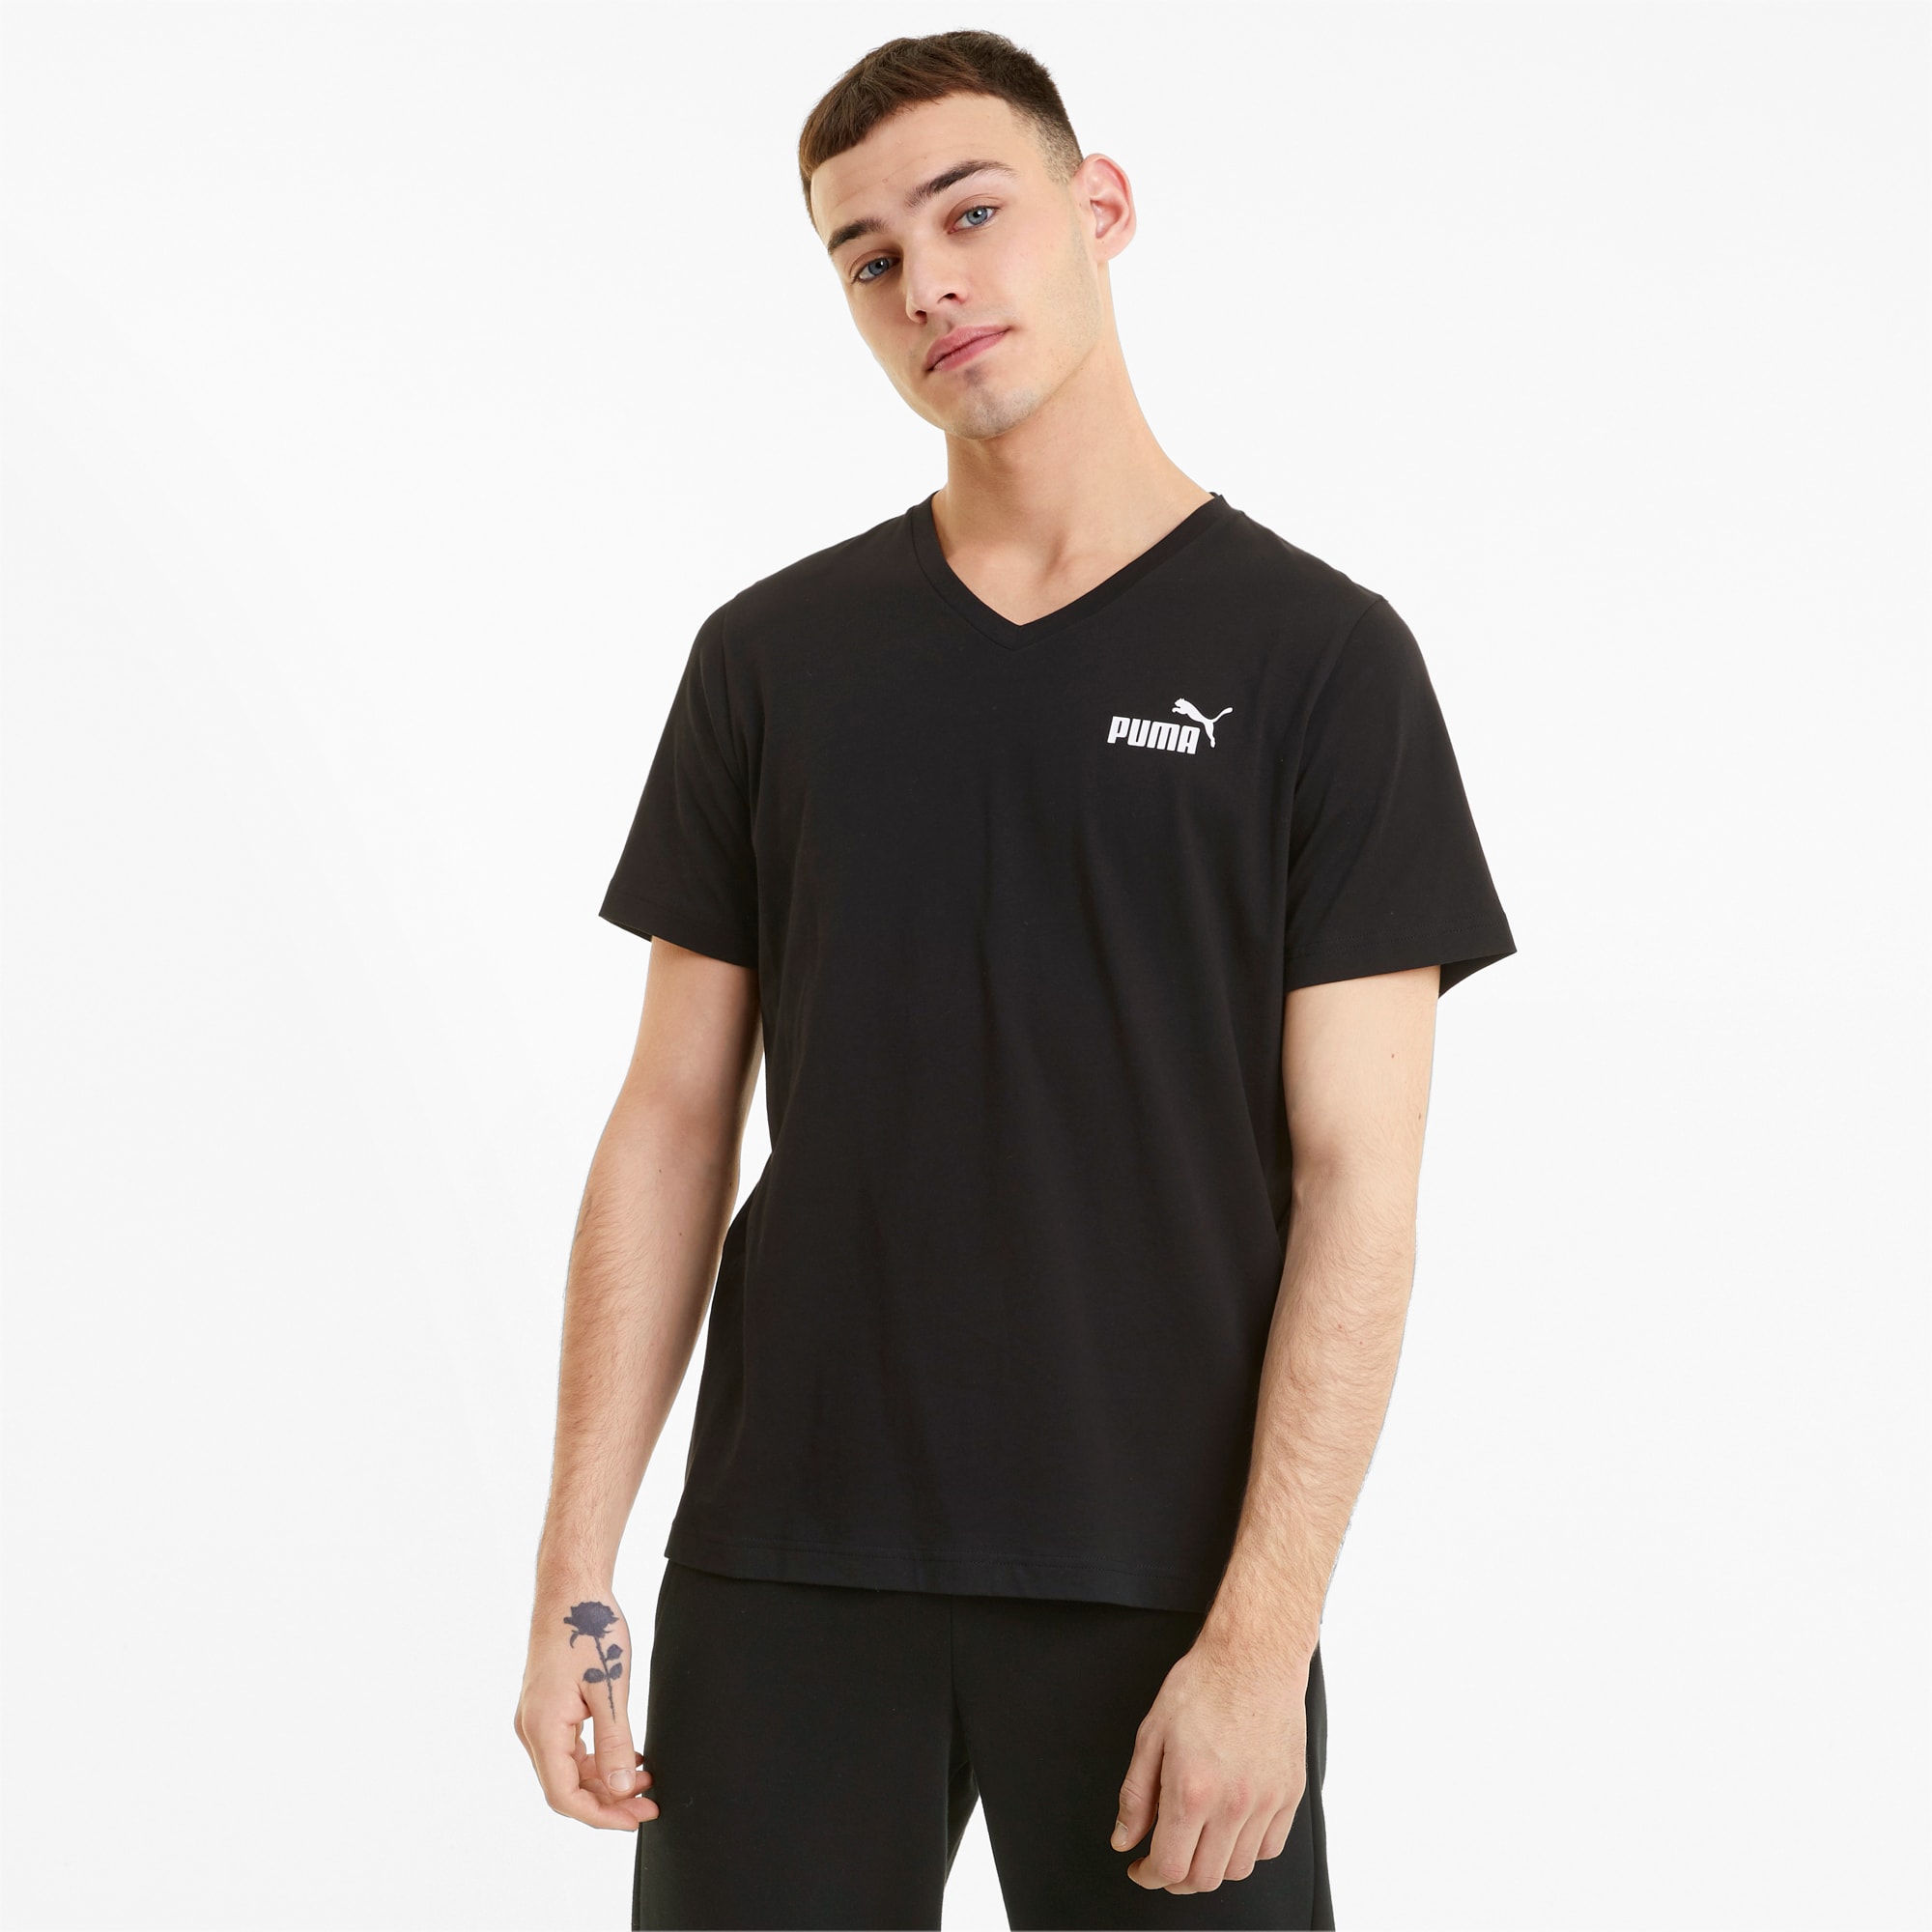 PUMA Essentials V-Neck T-Shirt Men, Black, Size S, Clothing